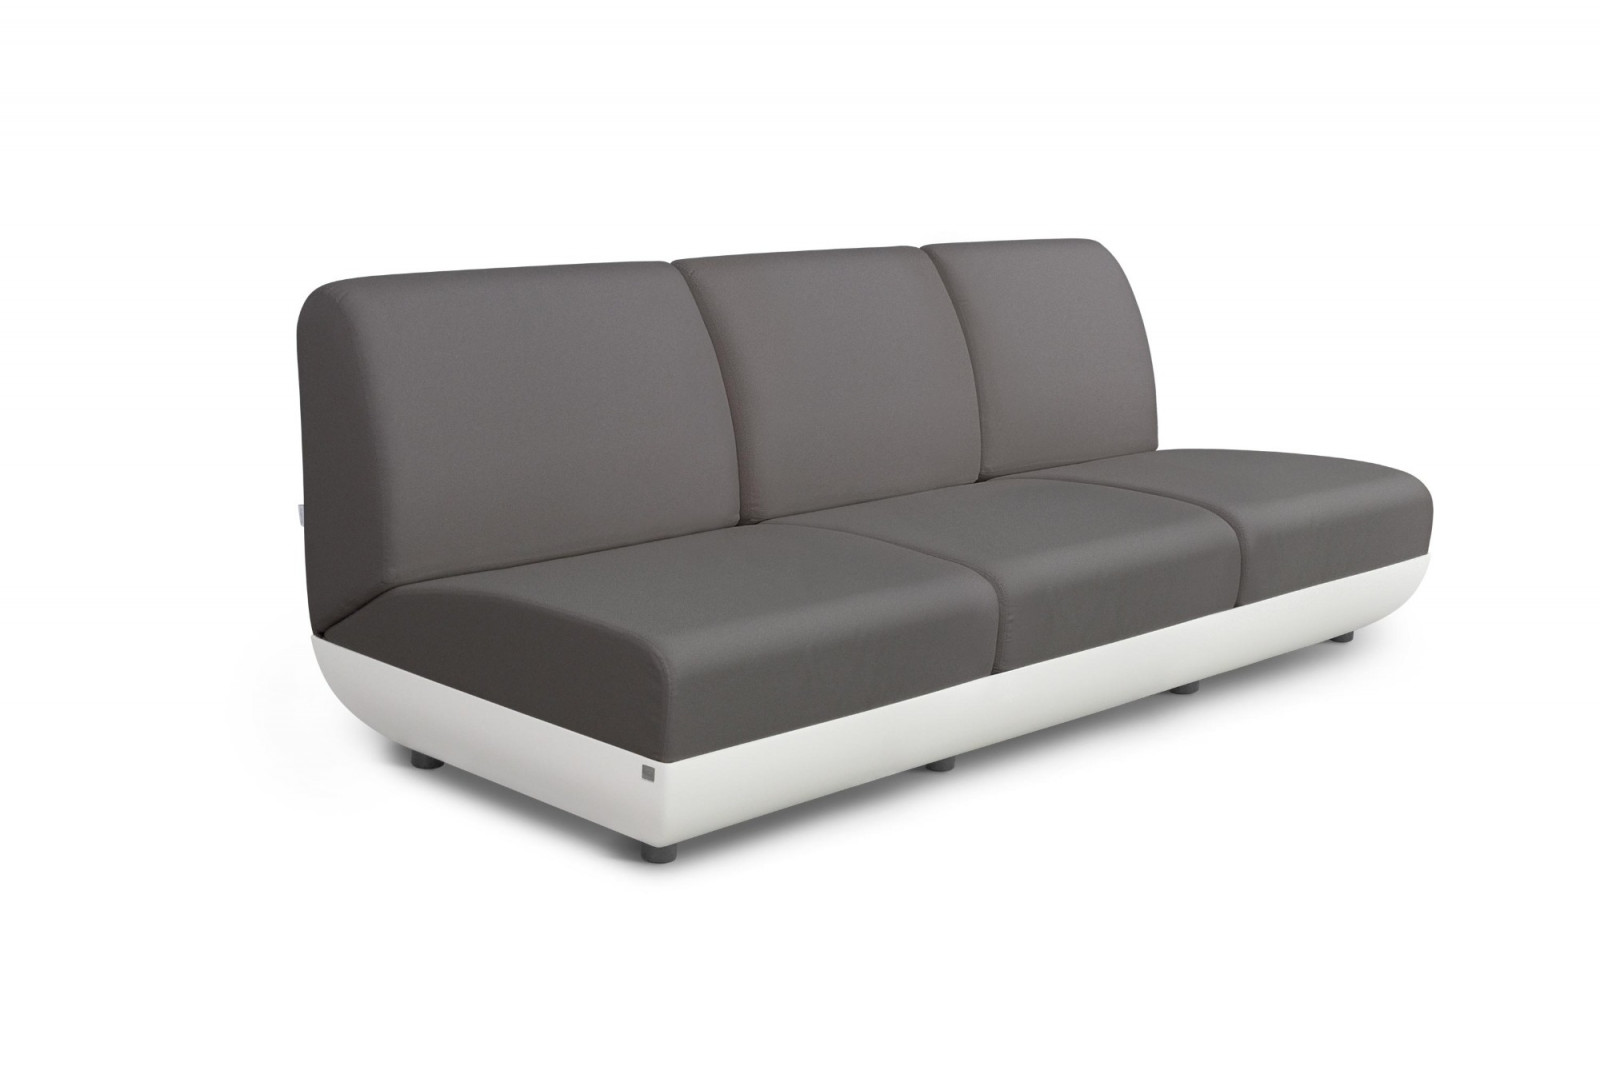 sofa-outdoor-resistant-exclusive-white-three-seats-victoria-gansk-14-2097-1600-1400-100